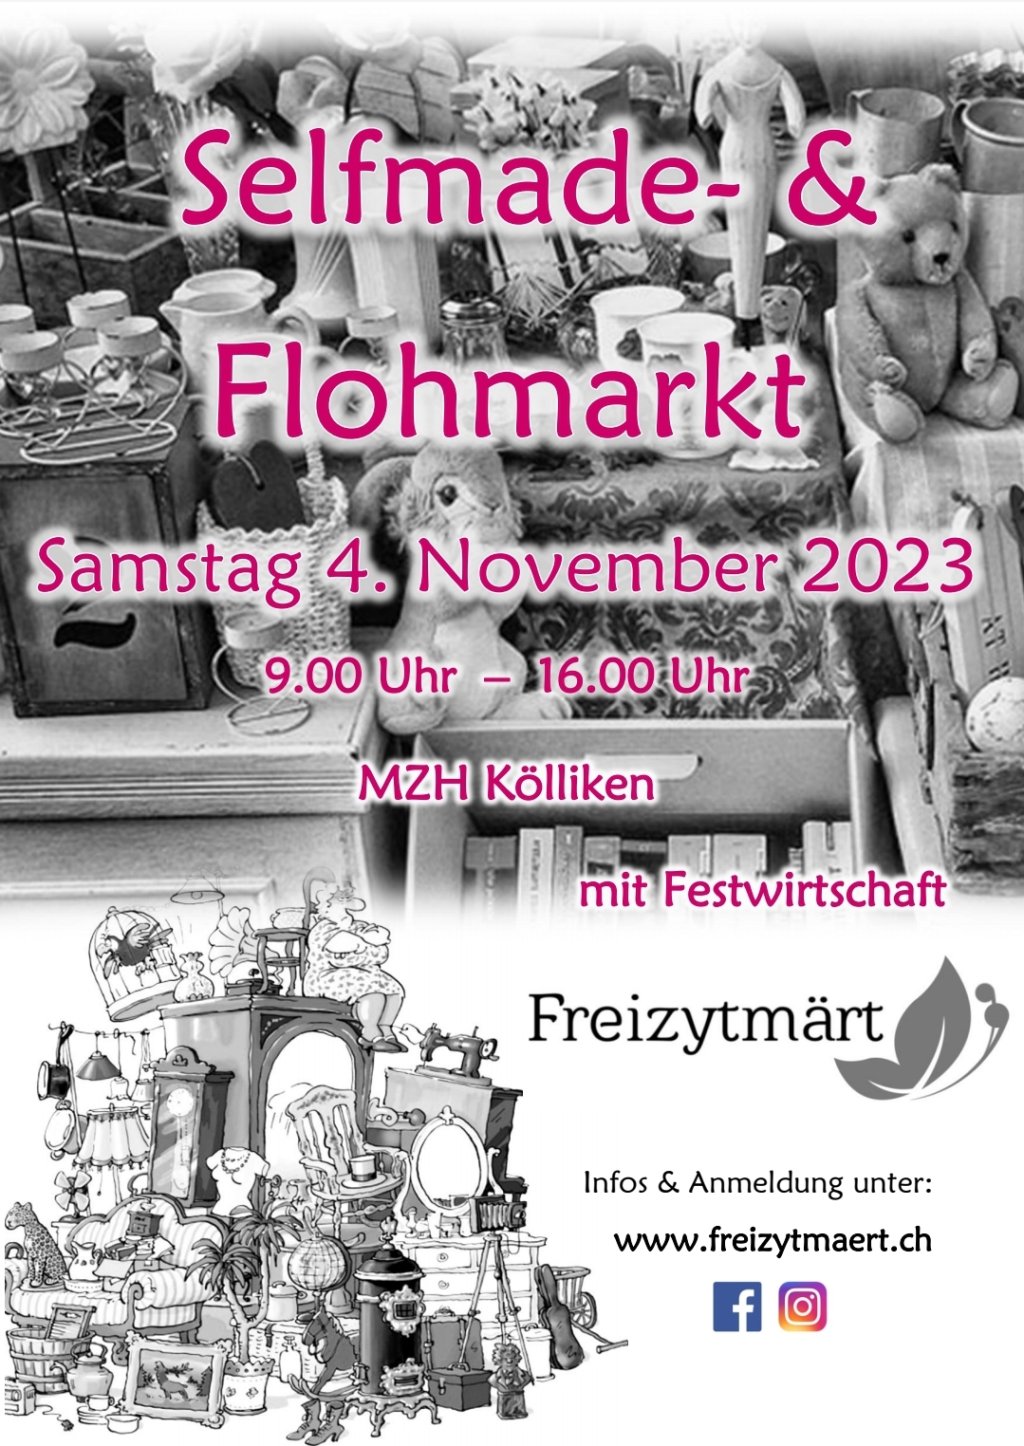 Selfmade- und Flohmarkt in Kölliken / November 2023